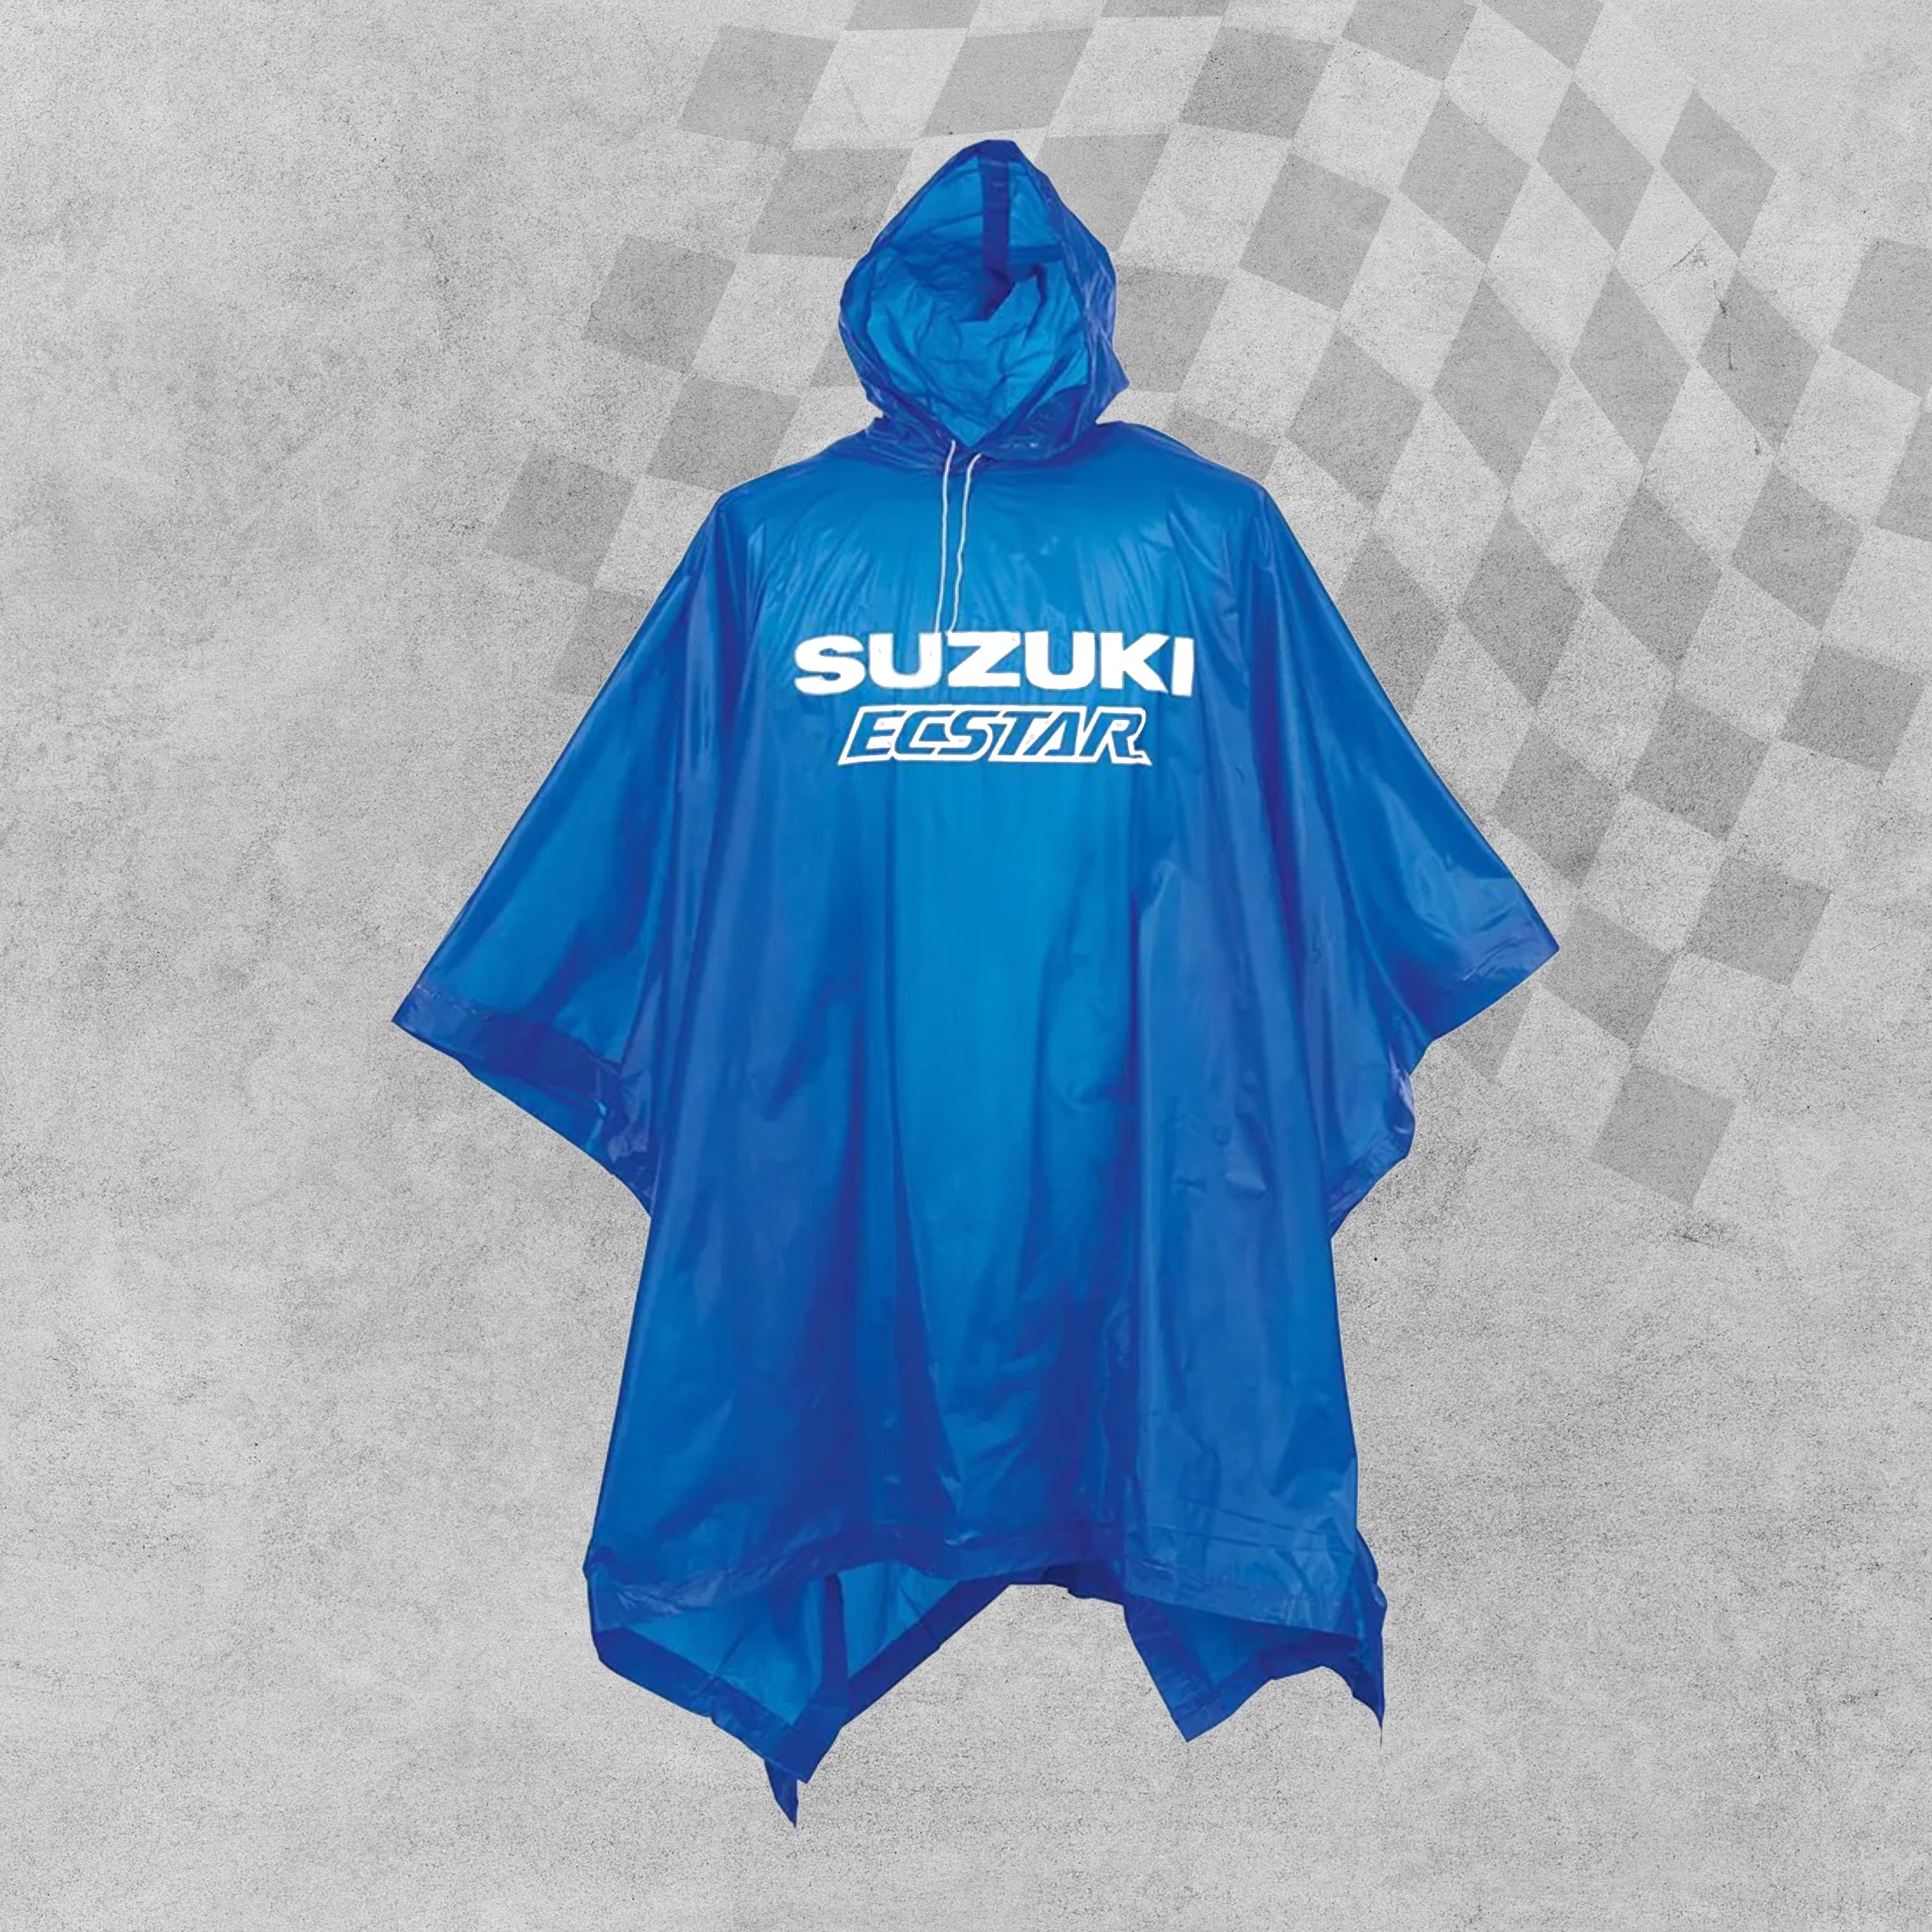 Suzuki MotoGP 2020 Ecostar Waterproof Poncho